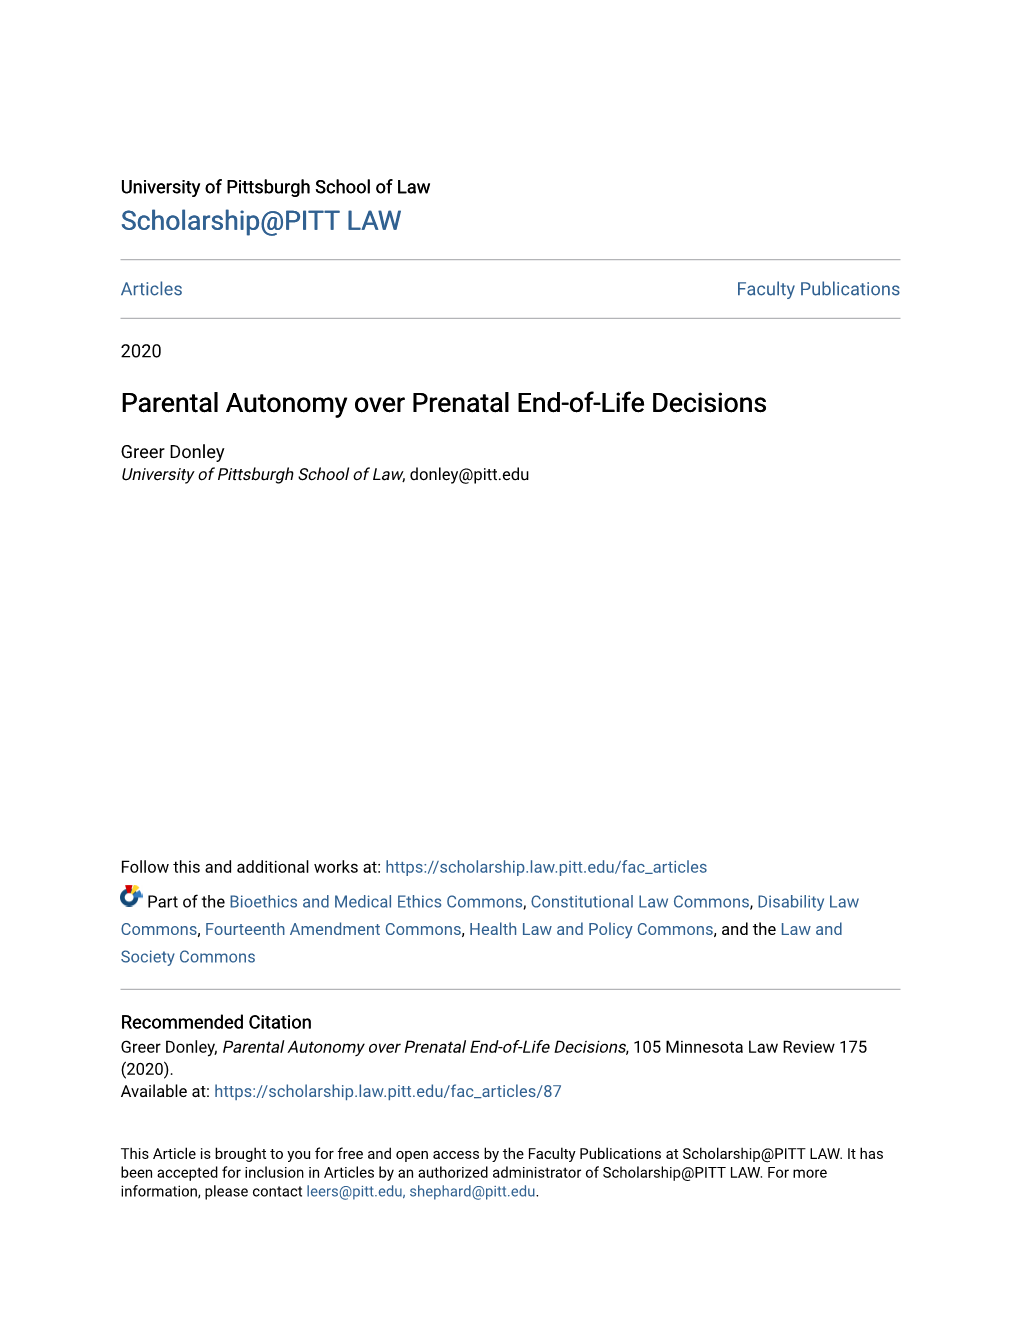 Parental Autonomy Over Prenatal End-Of-Life Decisions